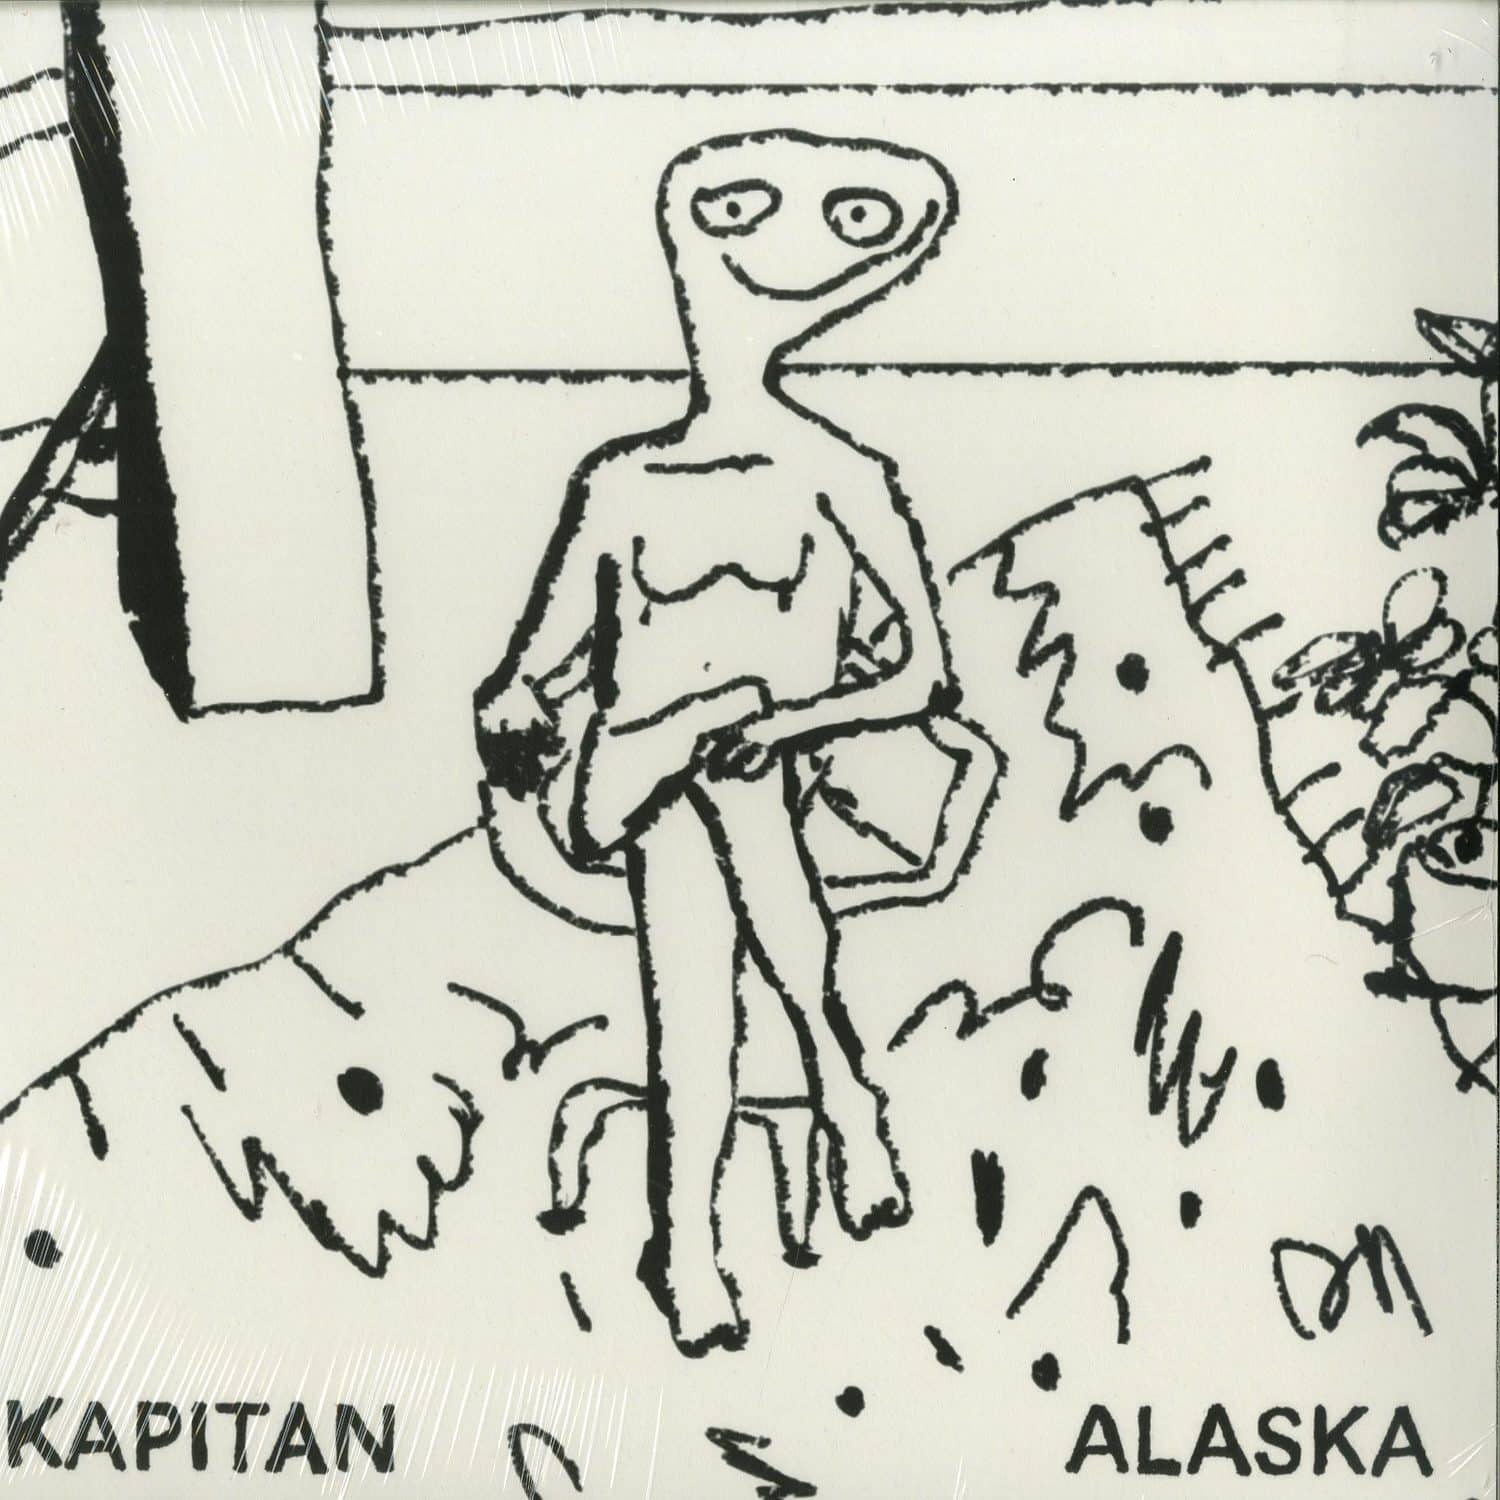 Kapitan - ALASKA 